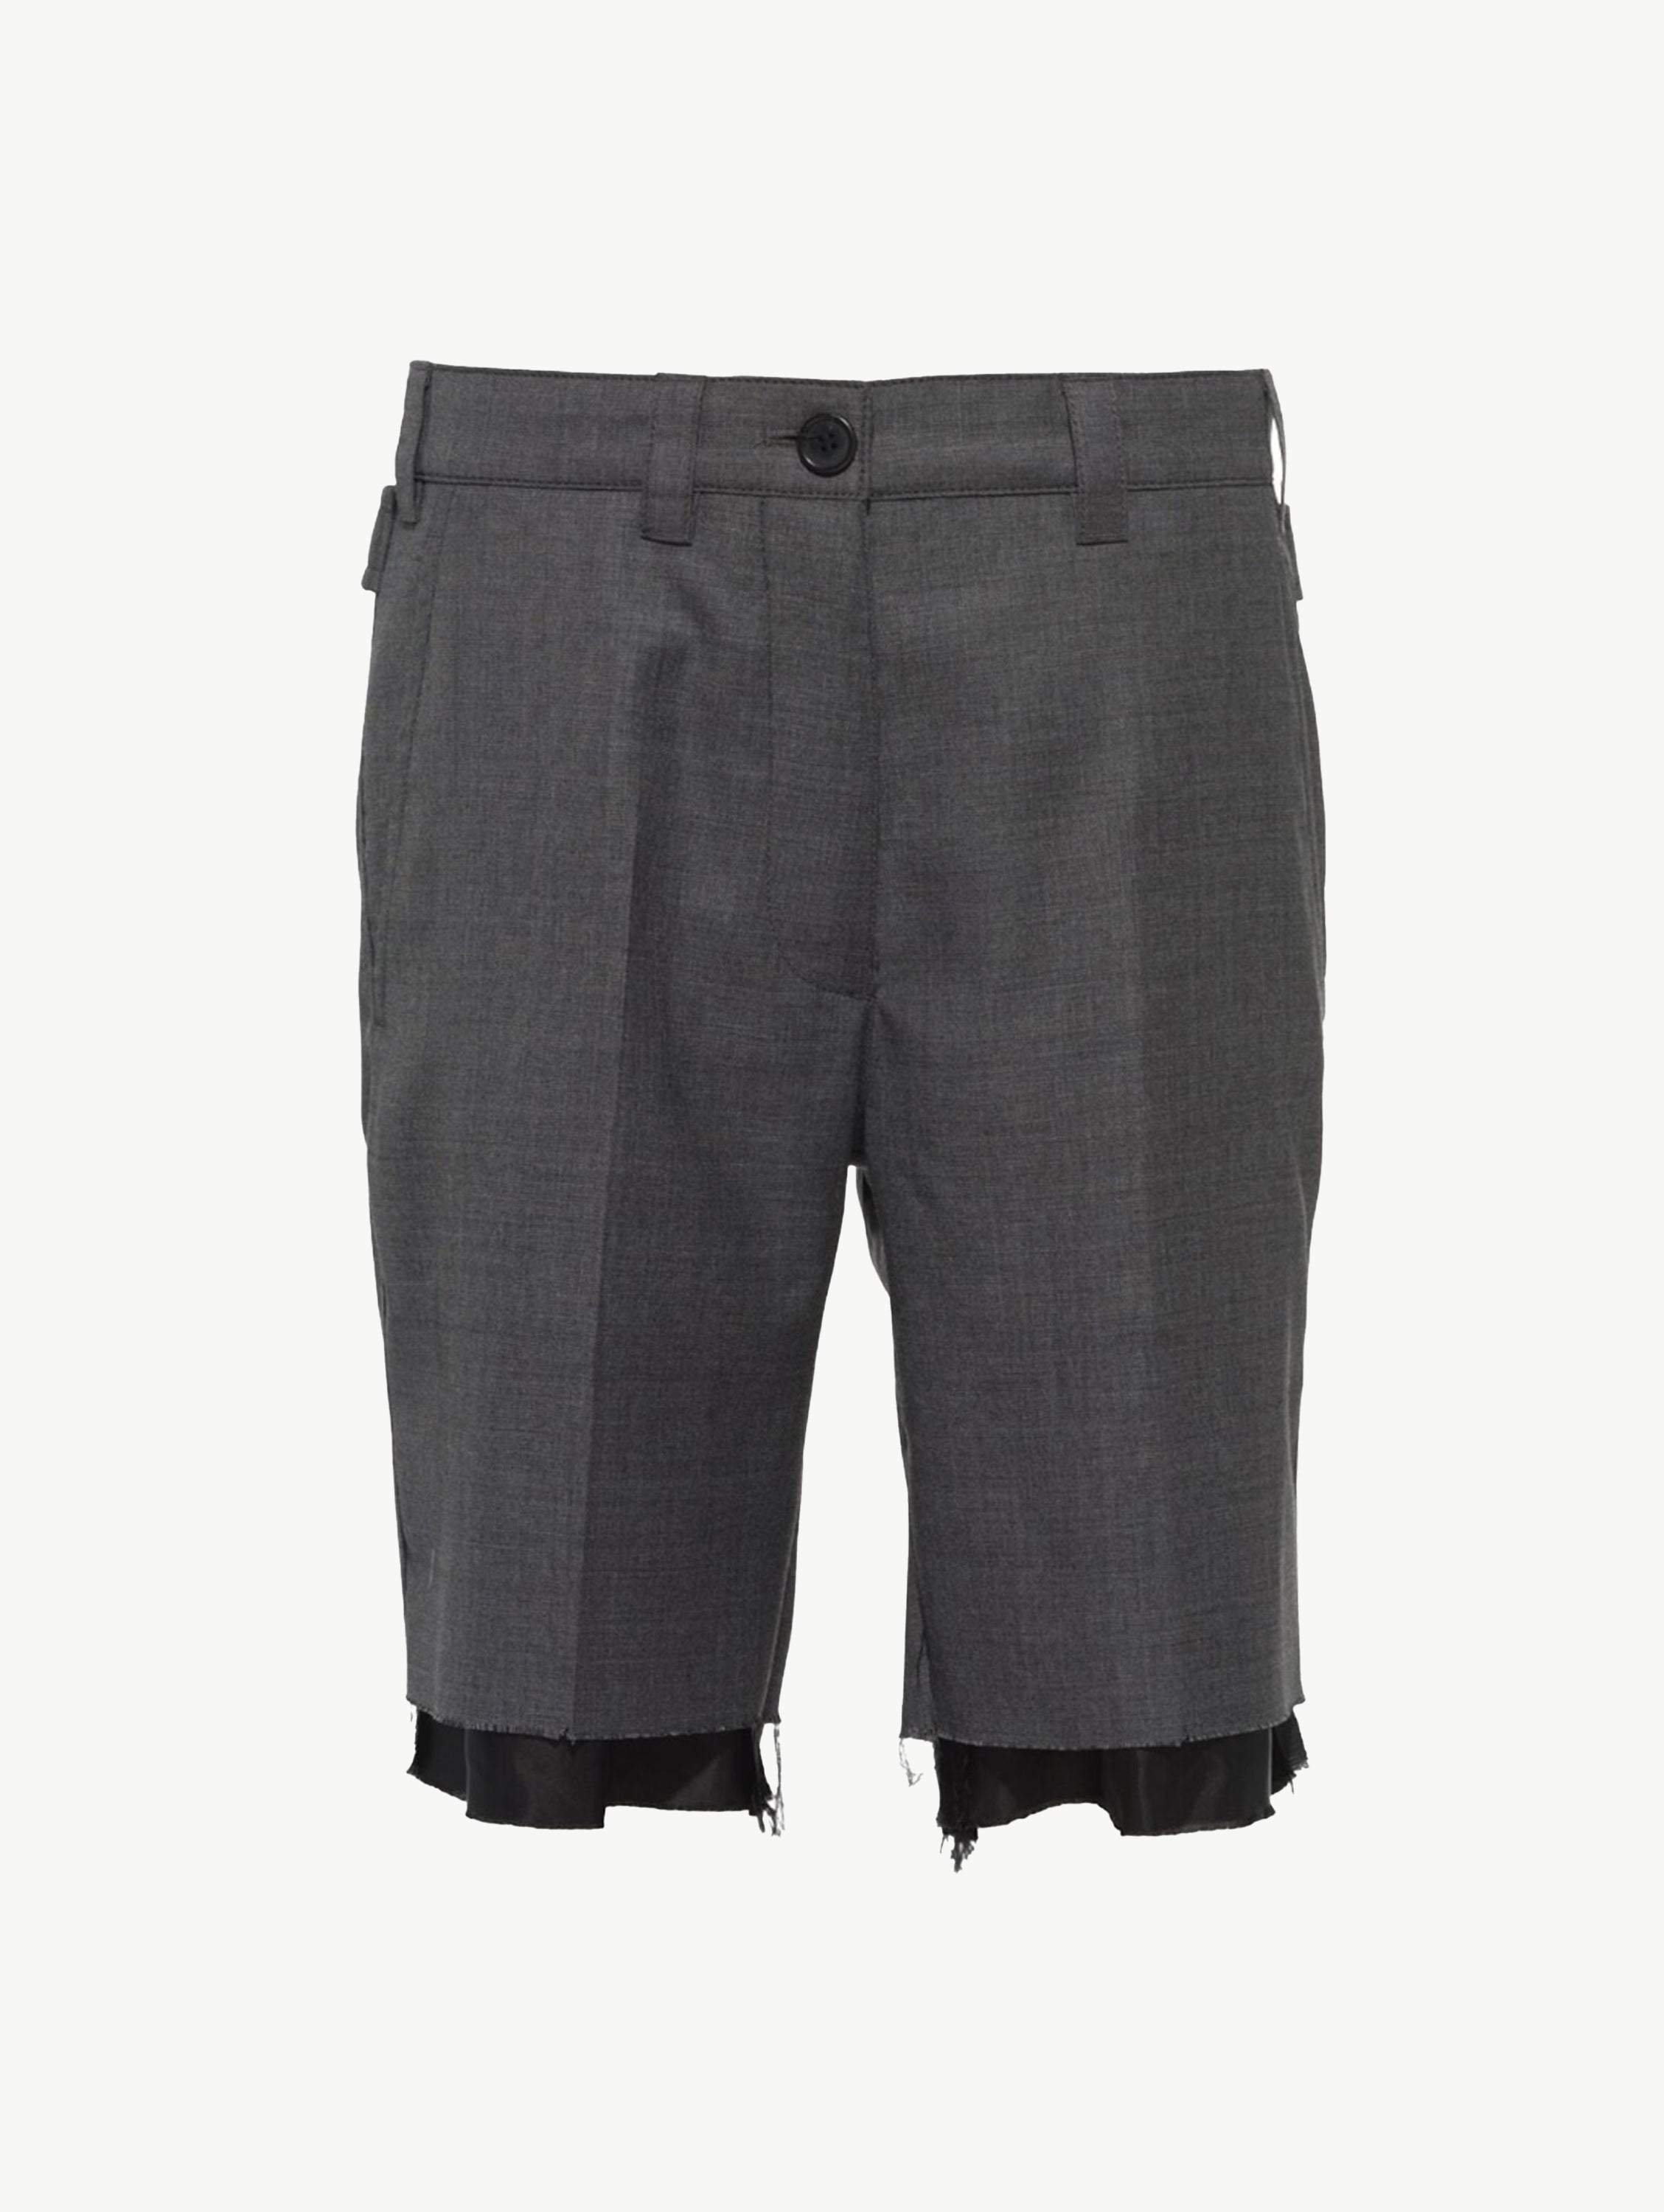 Grey bermuda shorts